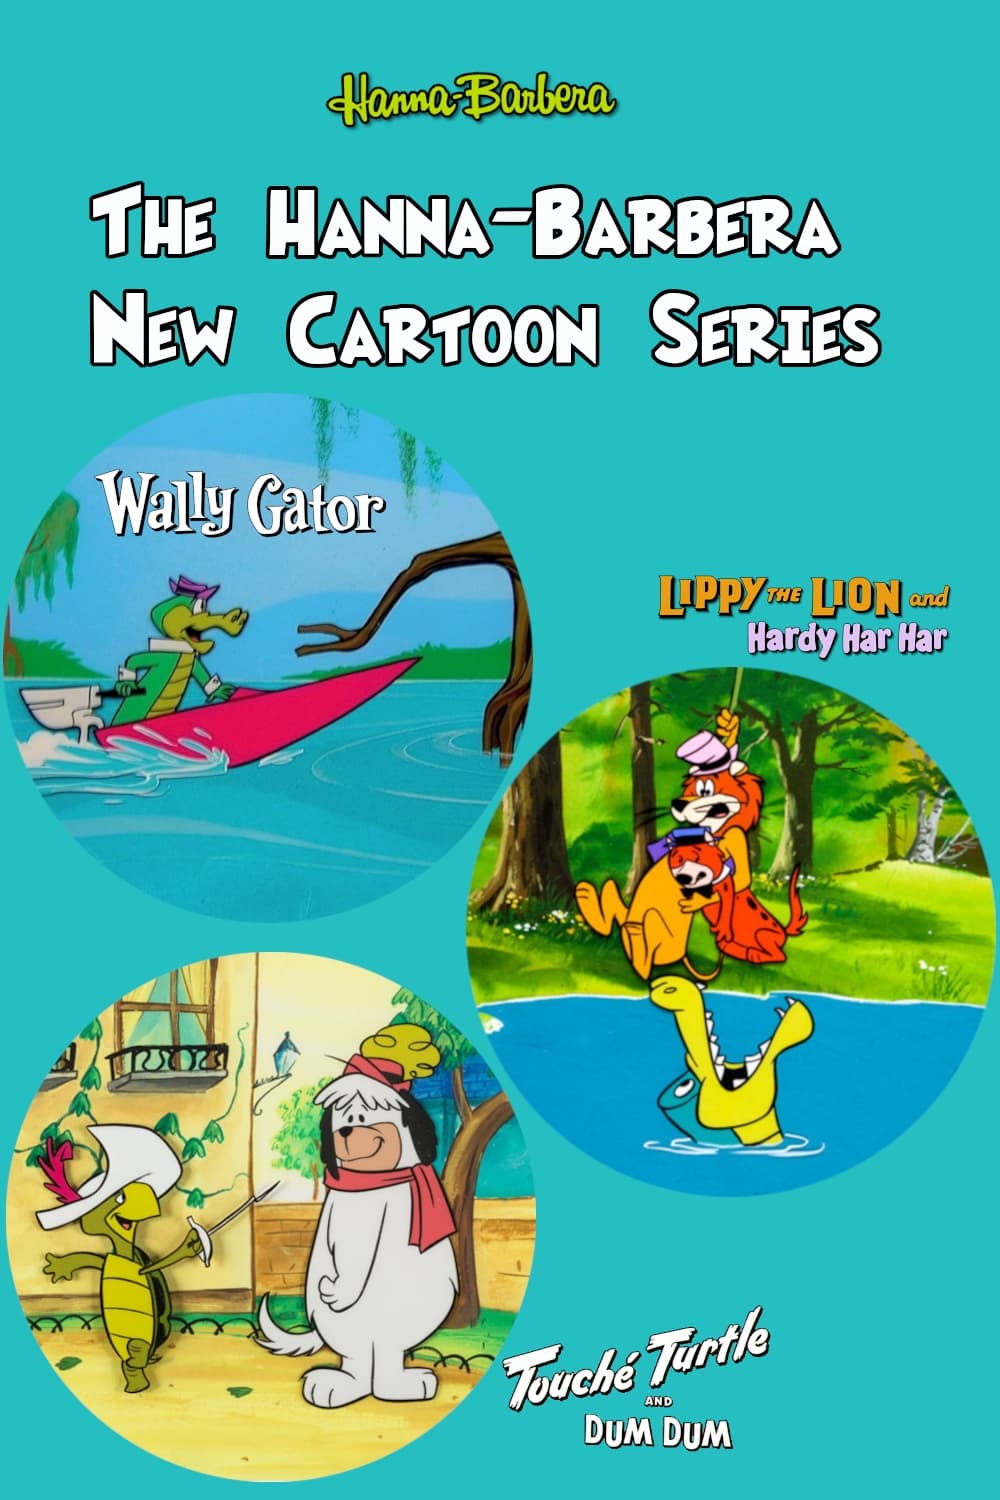 The Hanna-Barbera New Cartoon Series (1962)